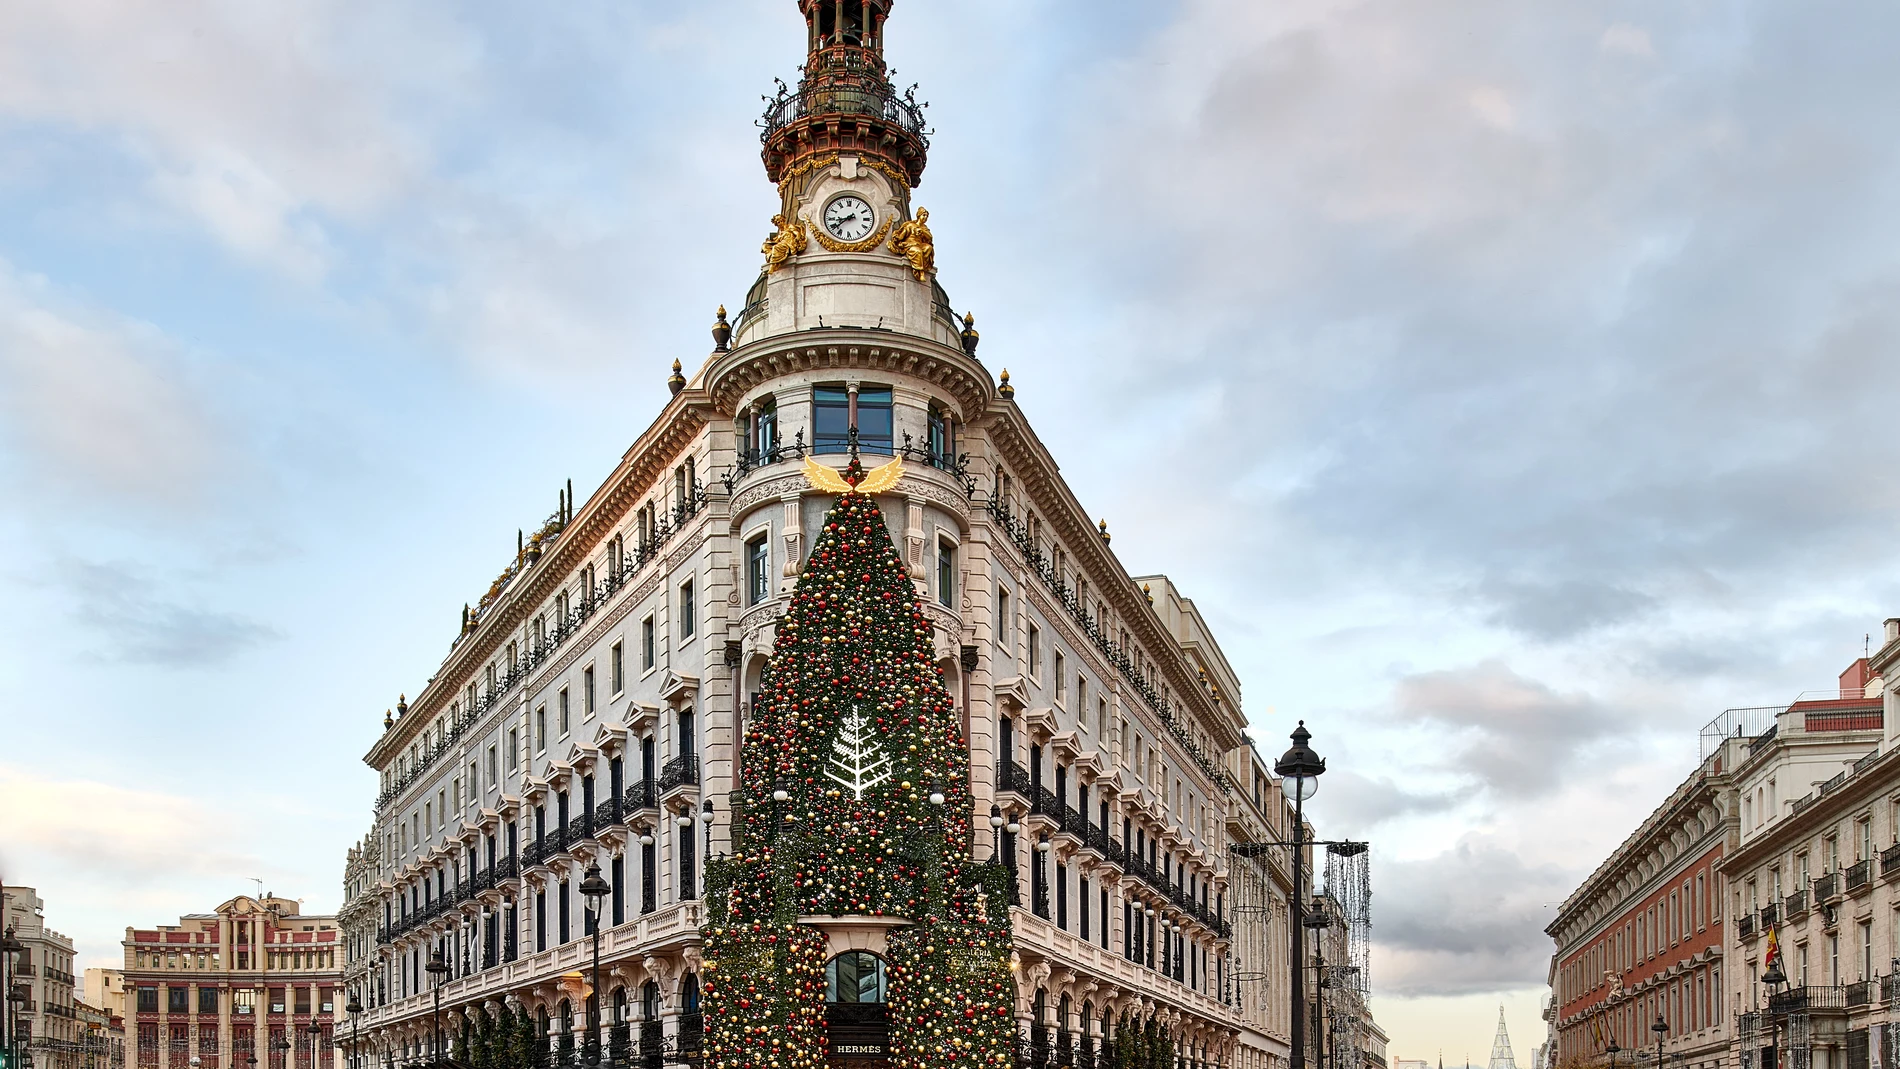 Fachada del hotel Four Seasons de Madrid